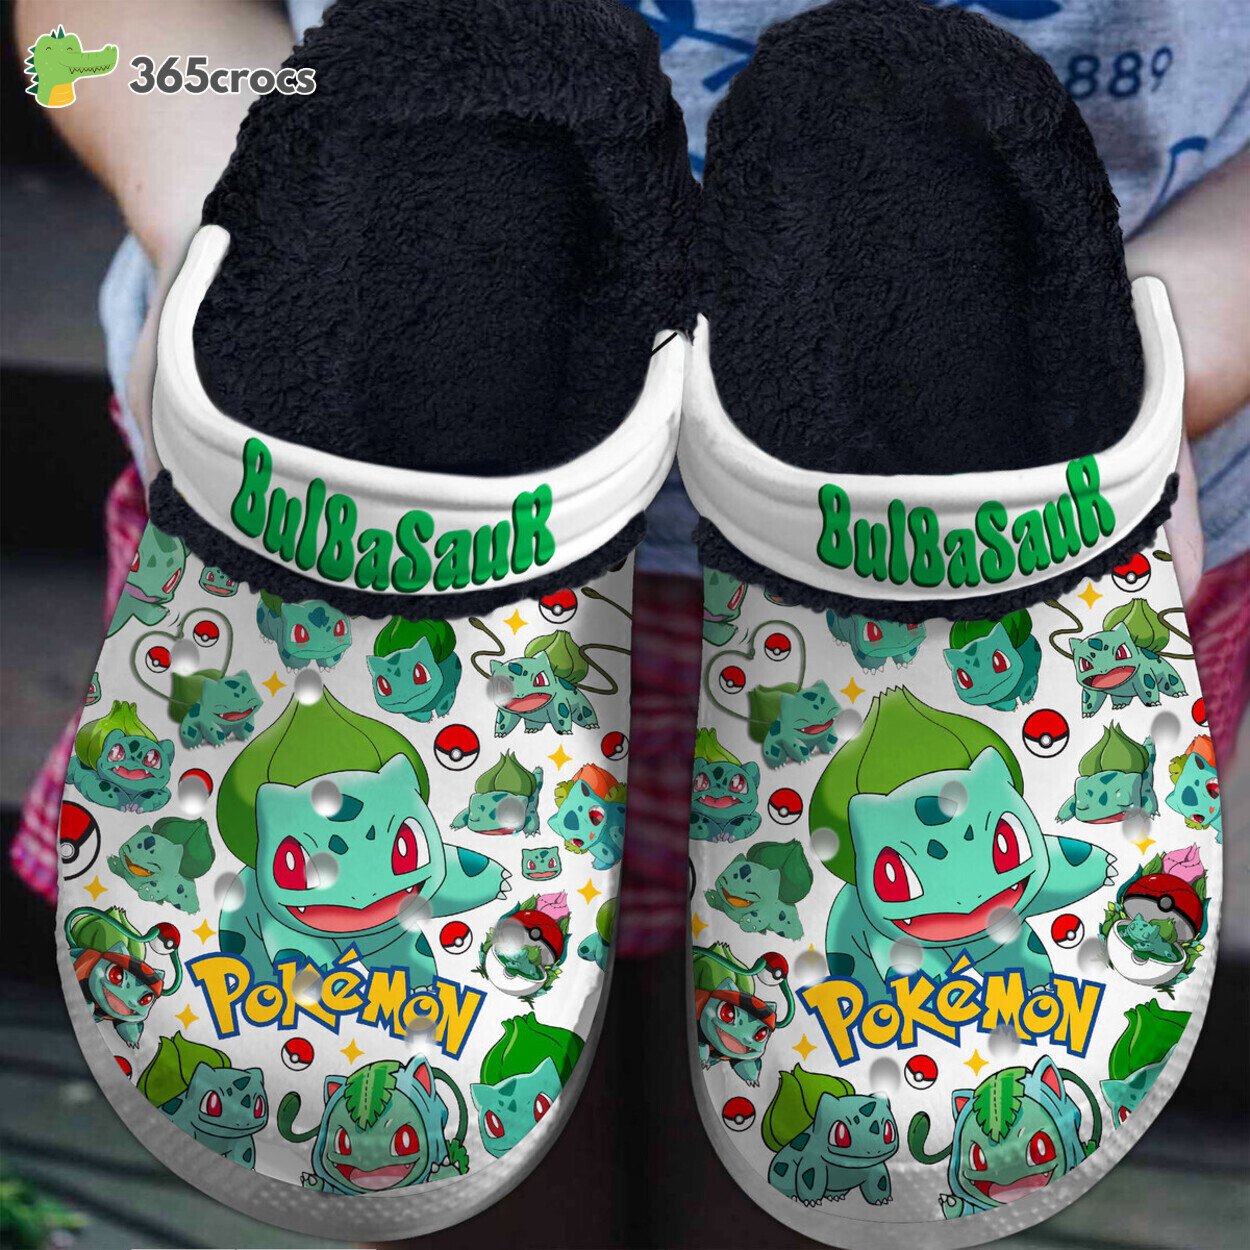 Bulbasaur Pokemon Cartoon Fur Lined Crocss Shoes Comfortable